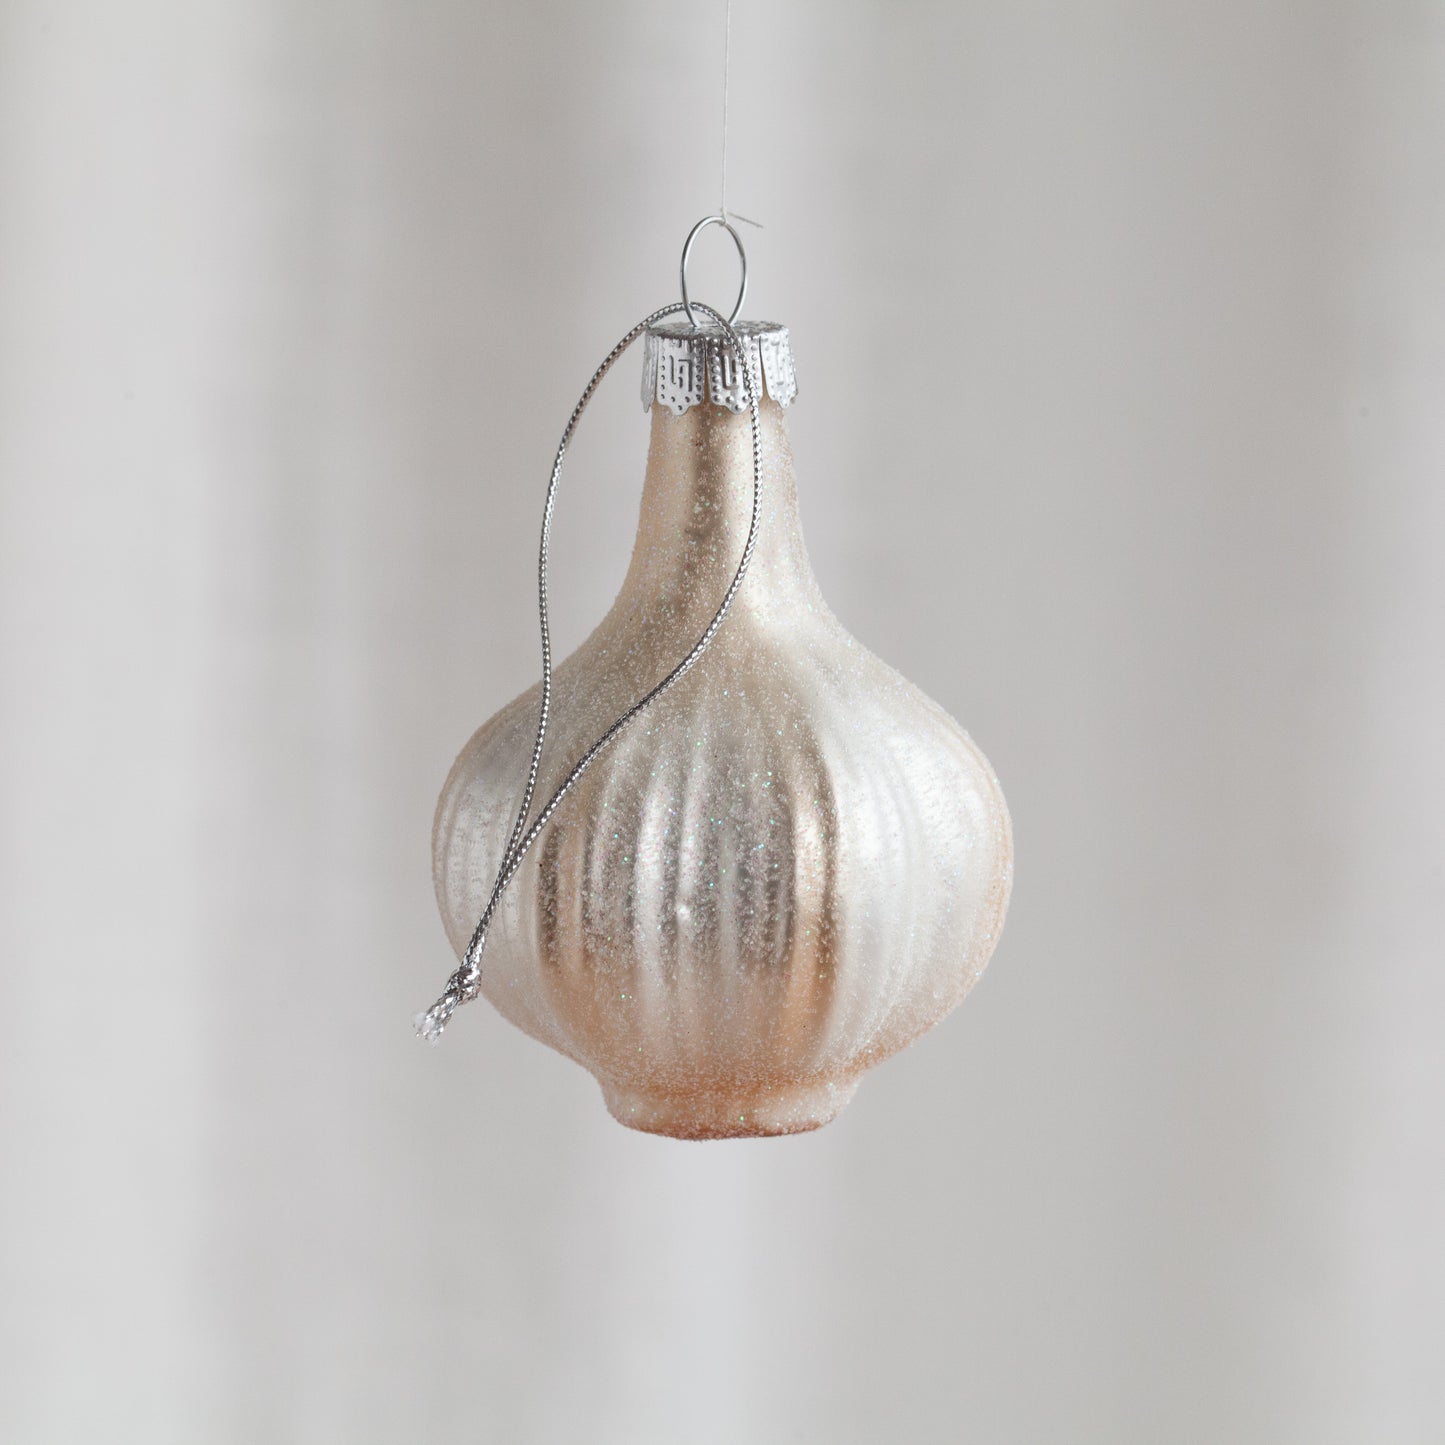 Garlic Blown Glass Ornament